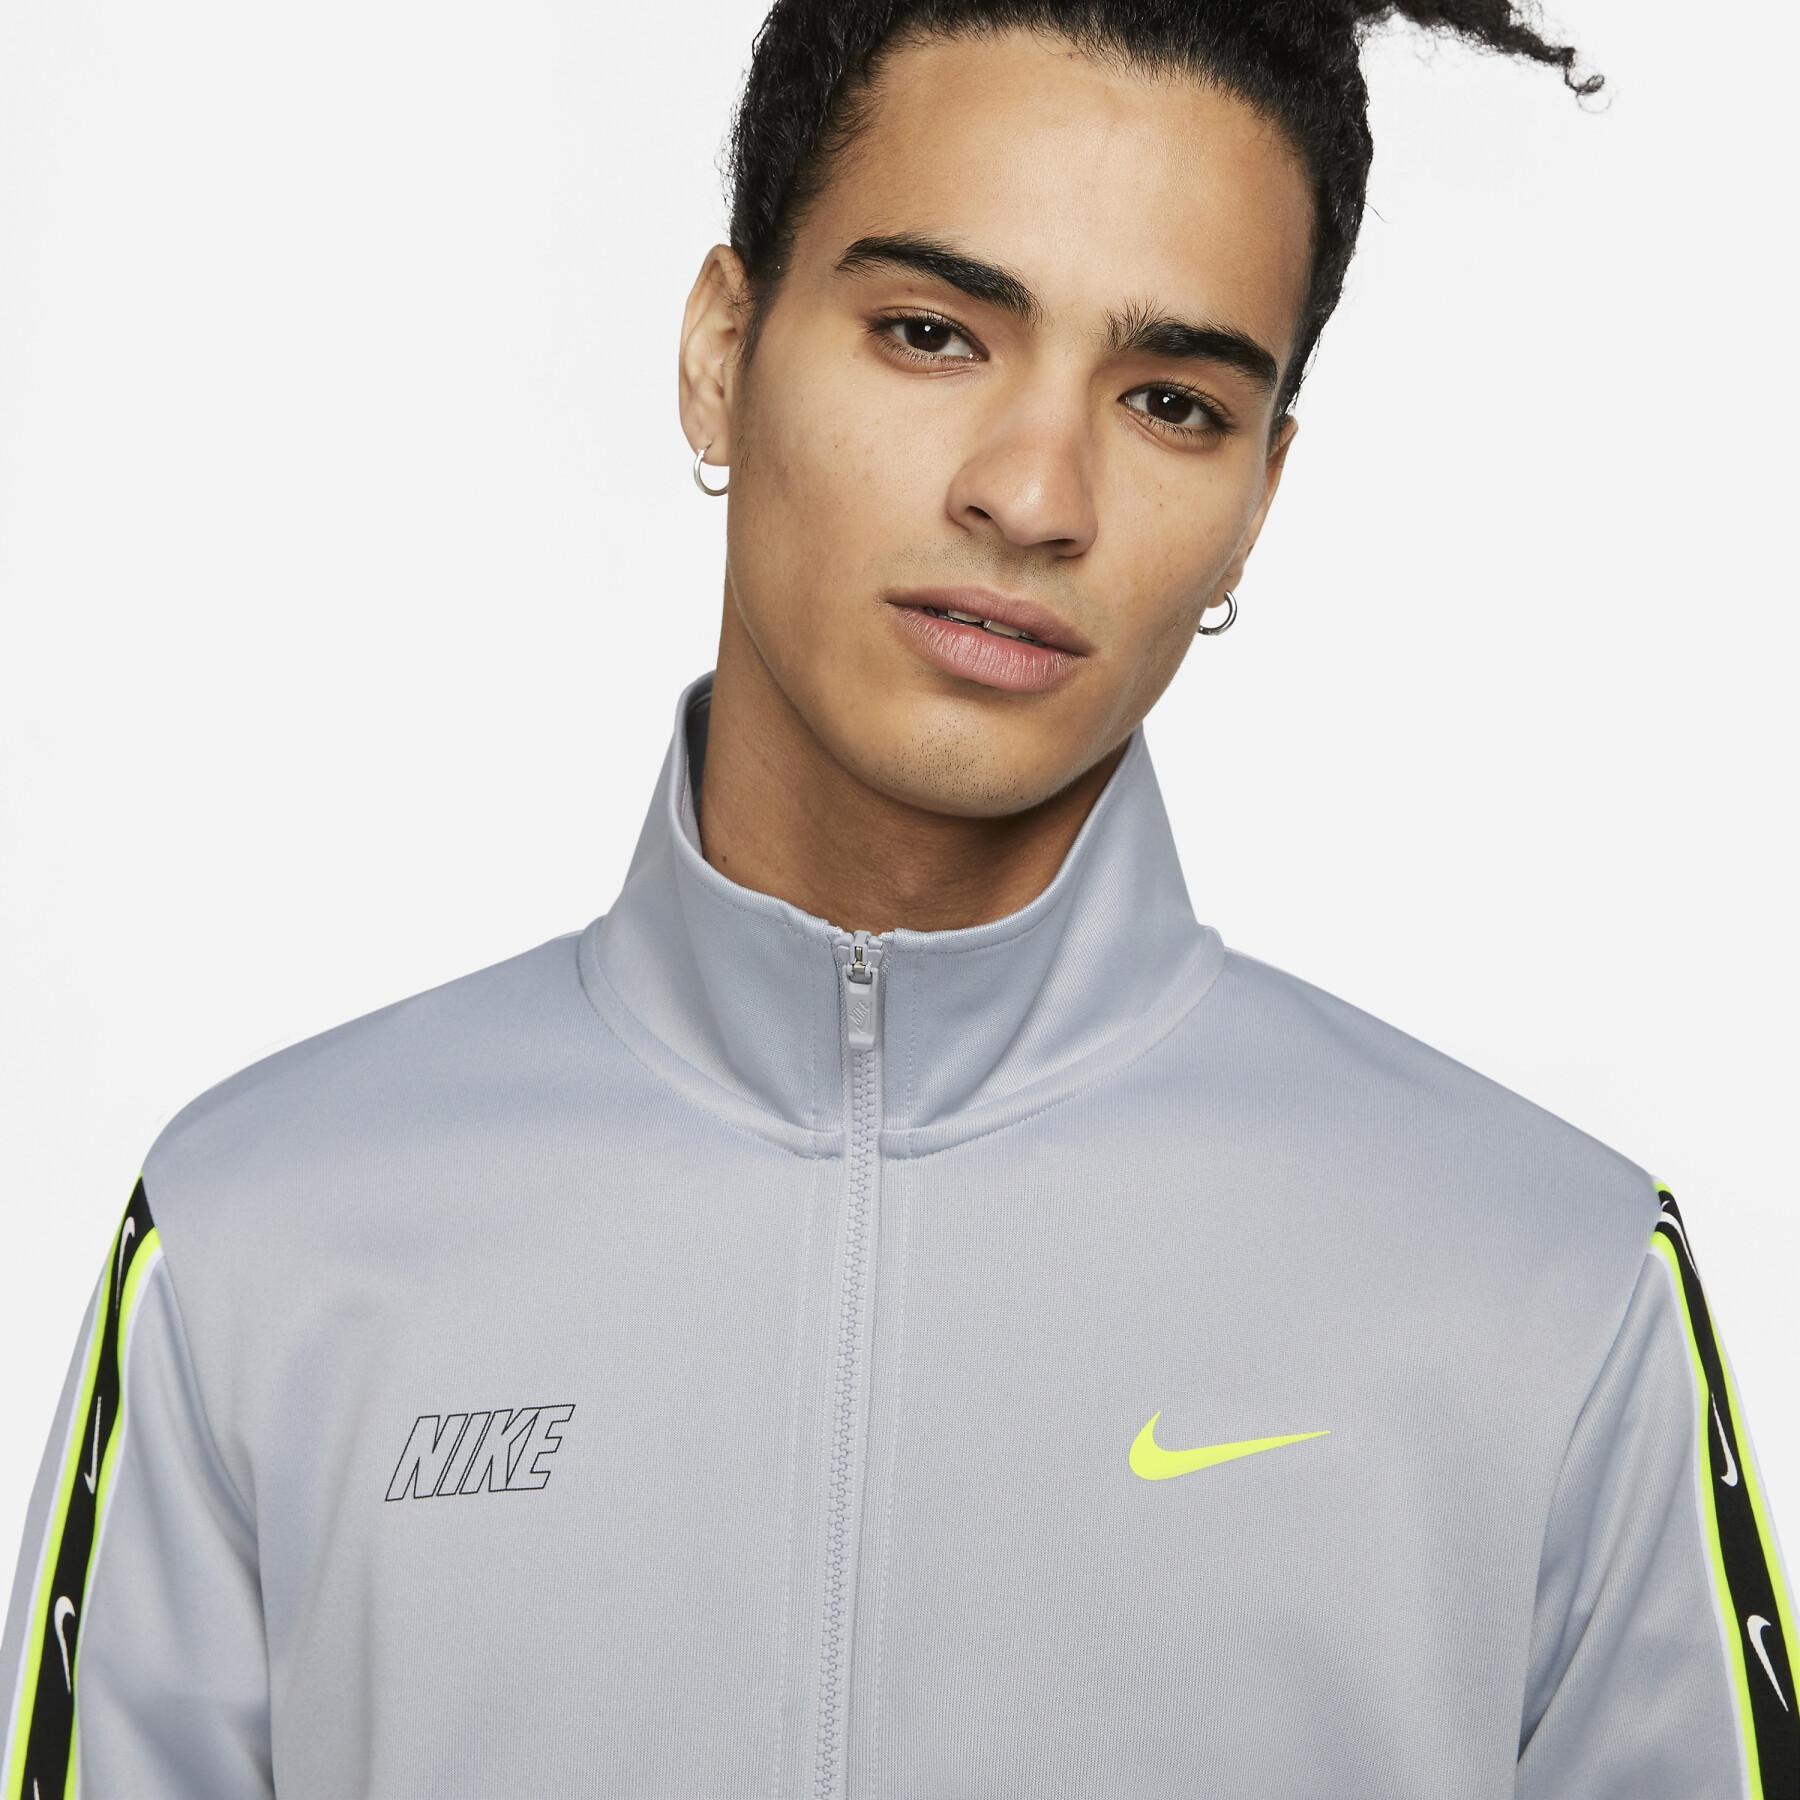 Sweat jacket Nike Repeat PK